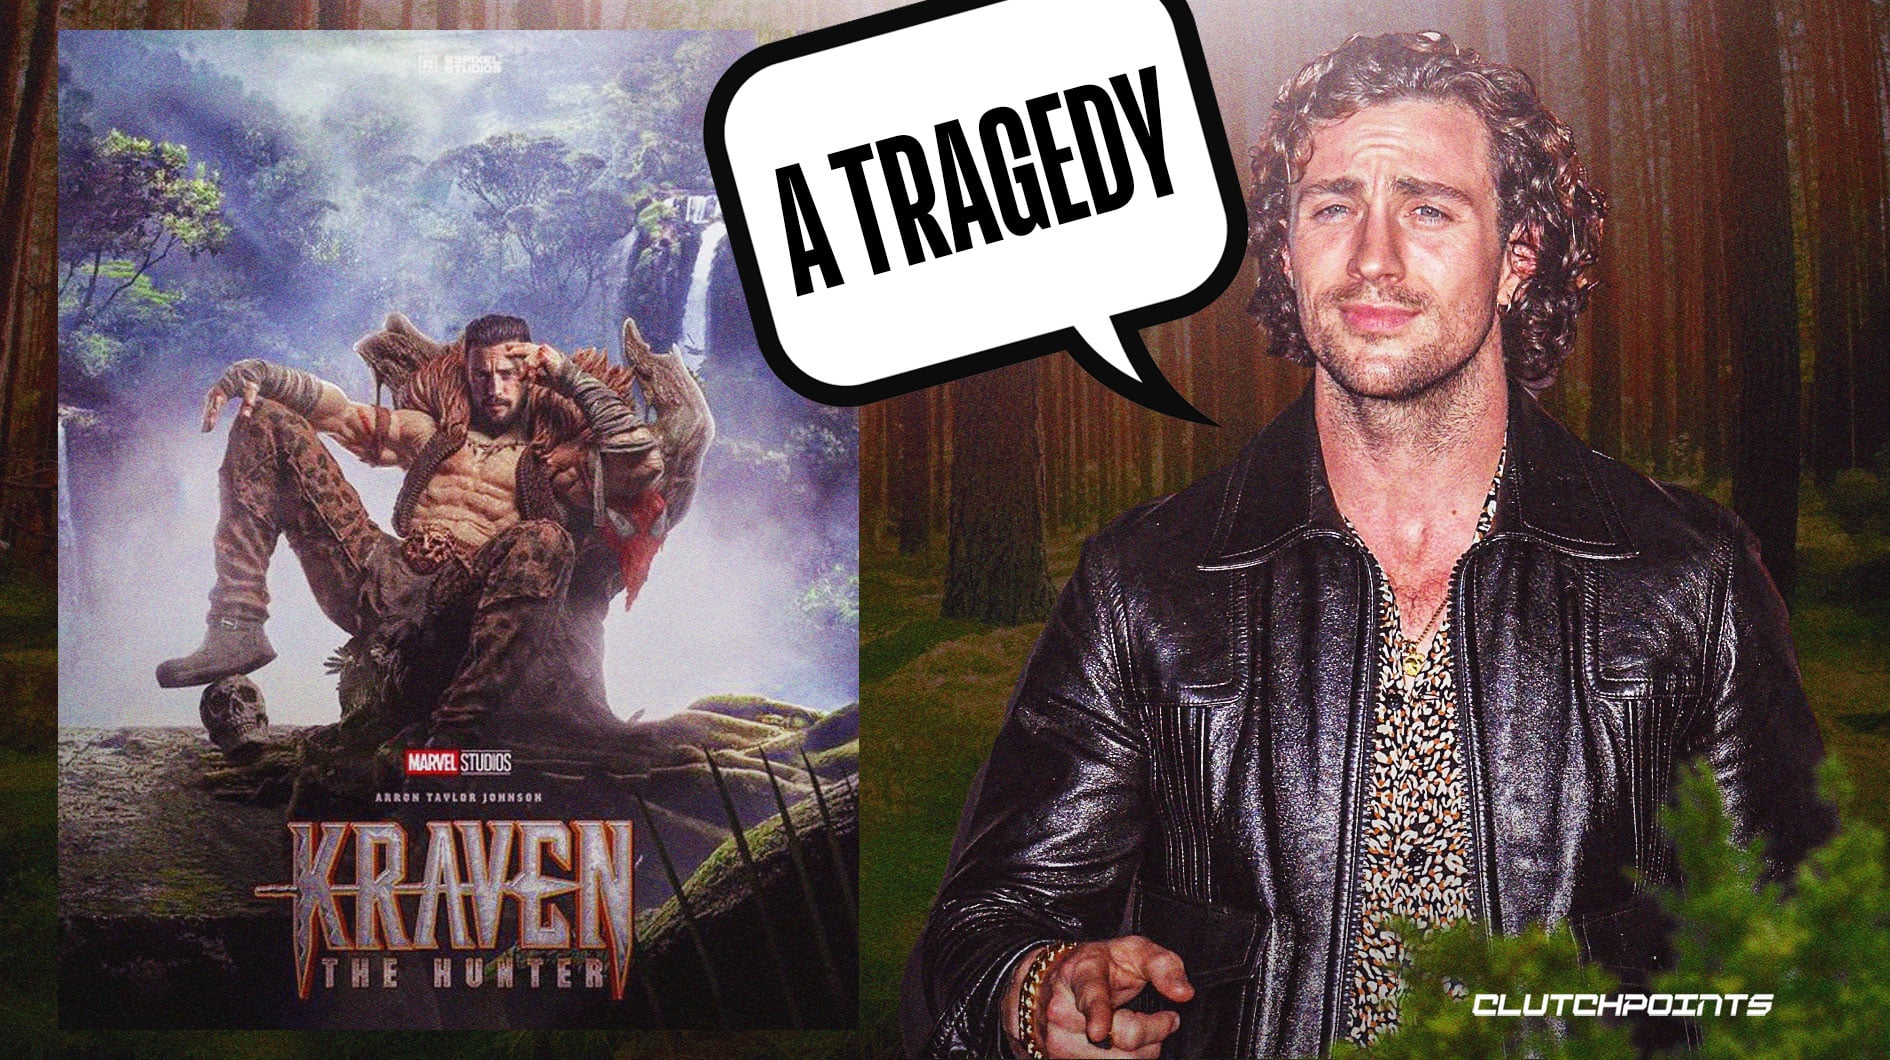 Kraven the Hunter': Trailer, Release Date, Cast, Spoilers